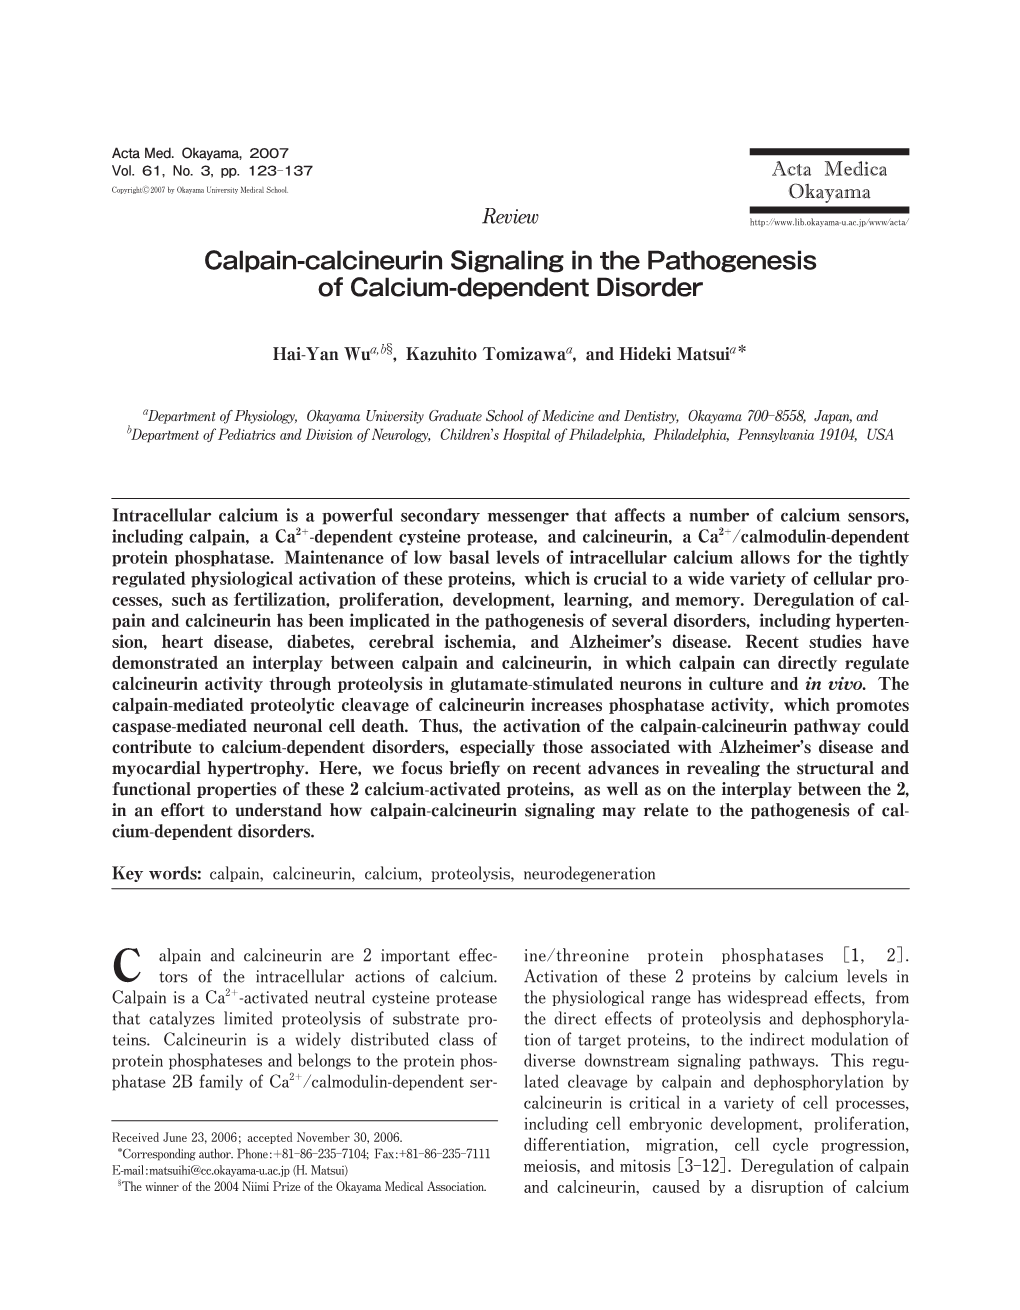 Calpain-Calcineurin Signaling in the Pathogenesis of Calcium-Dependent Disorder